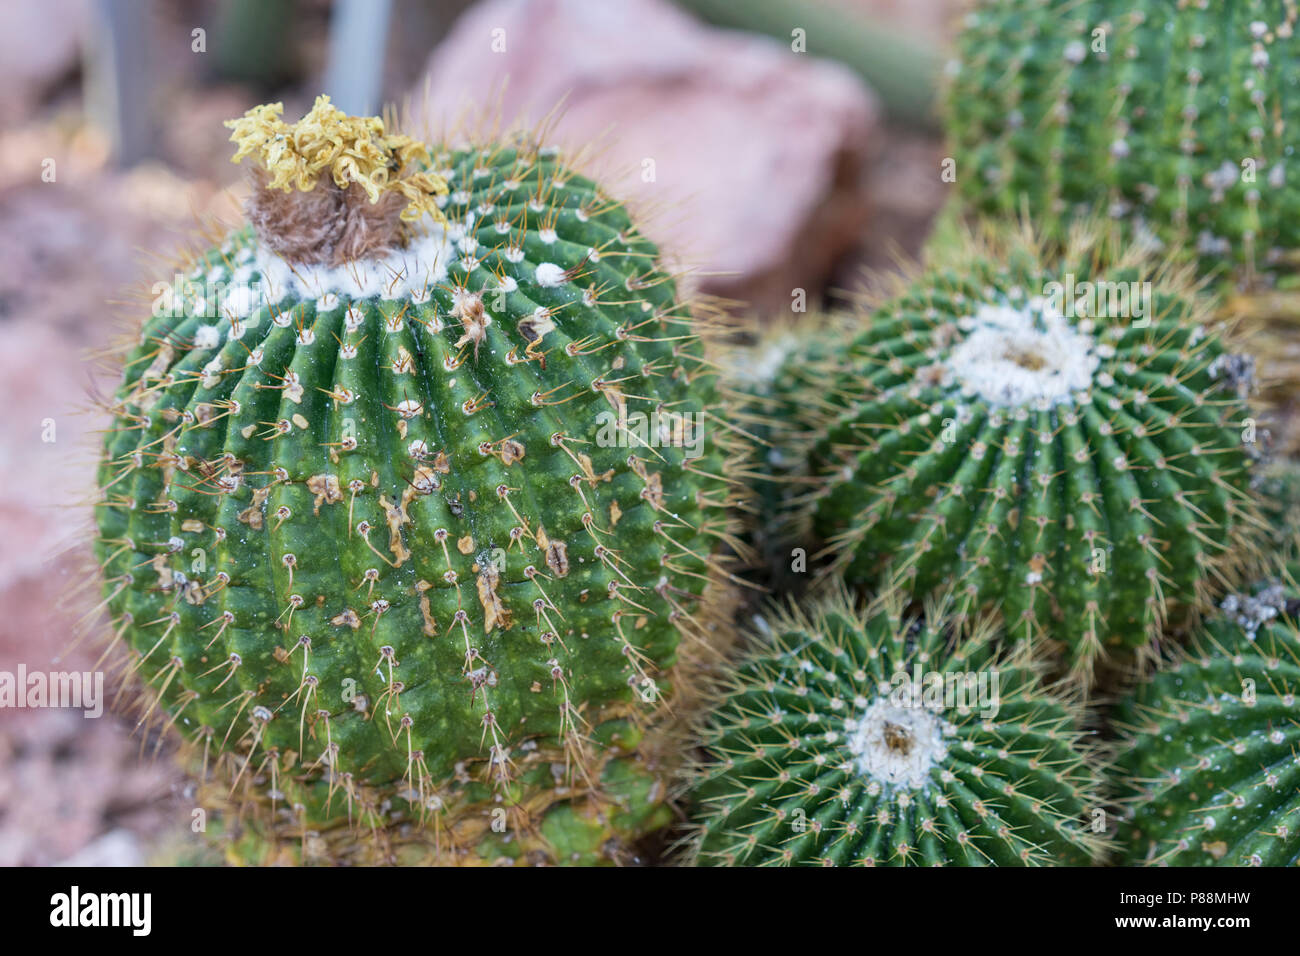 pardoria schumanniana single cactus with stones close up Stock Photo